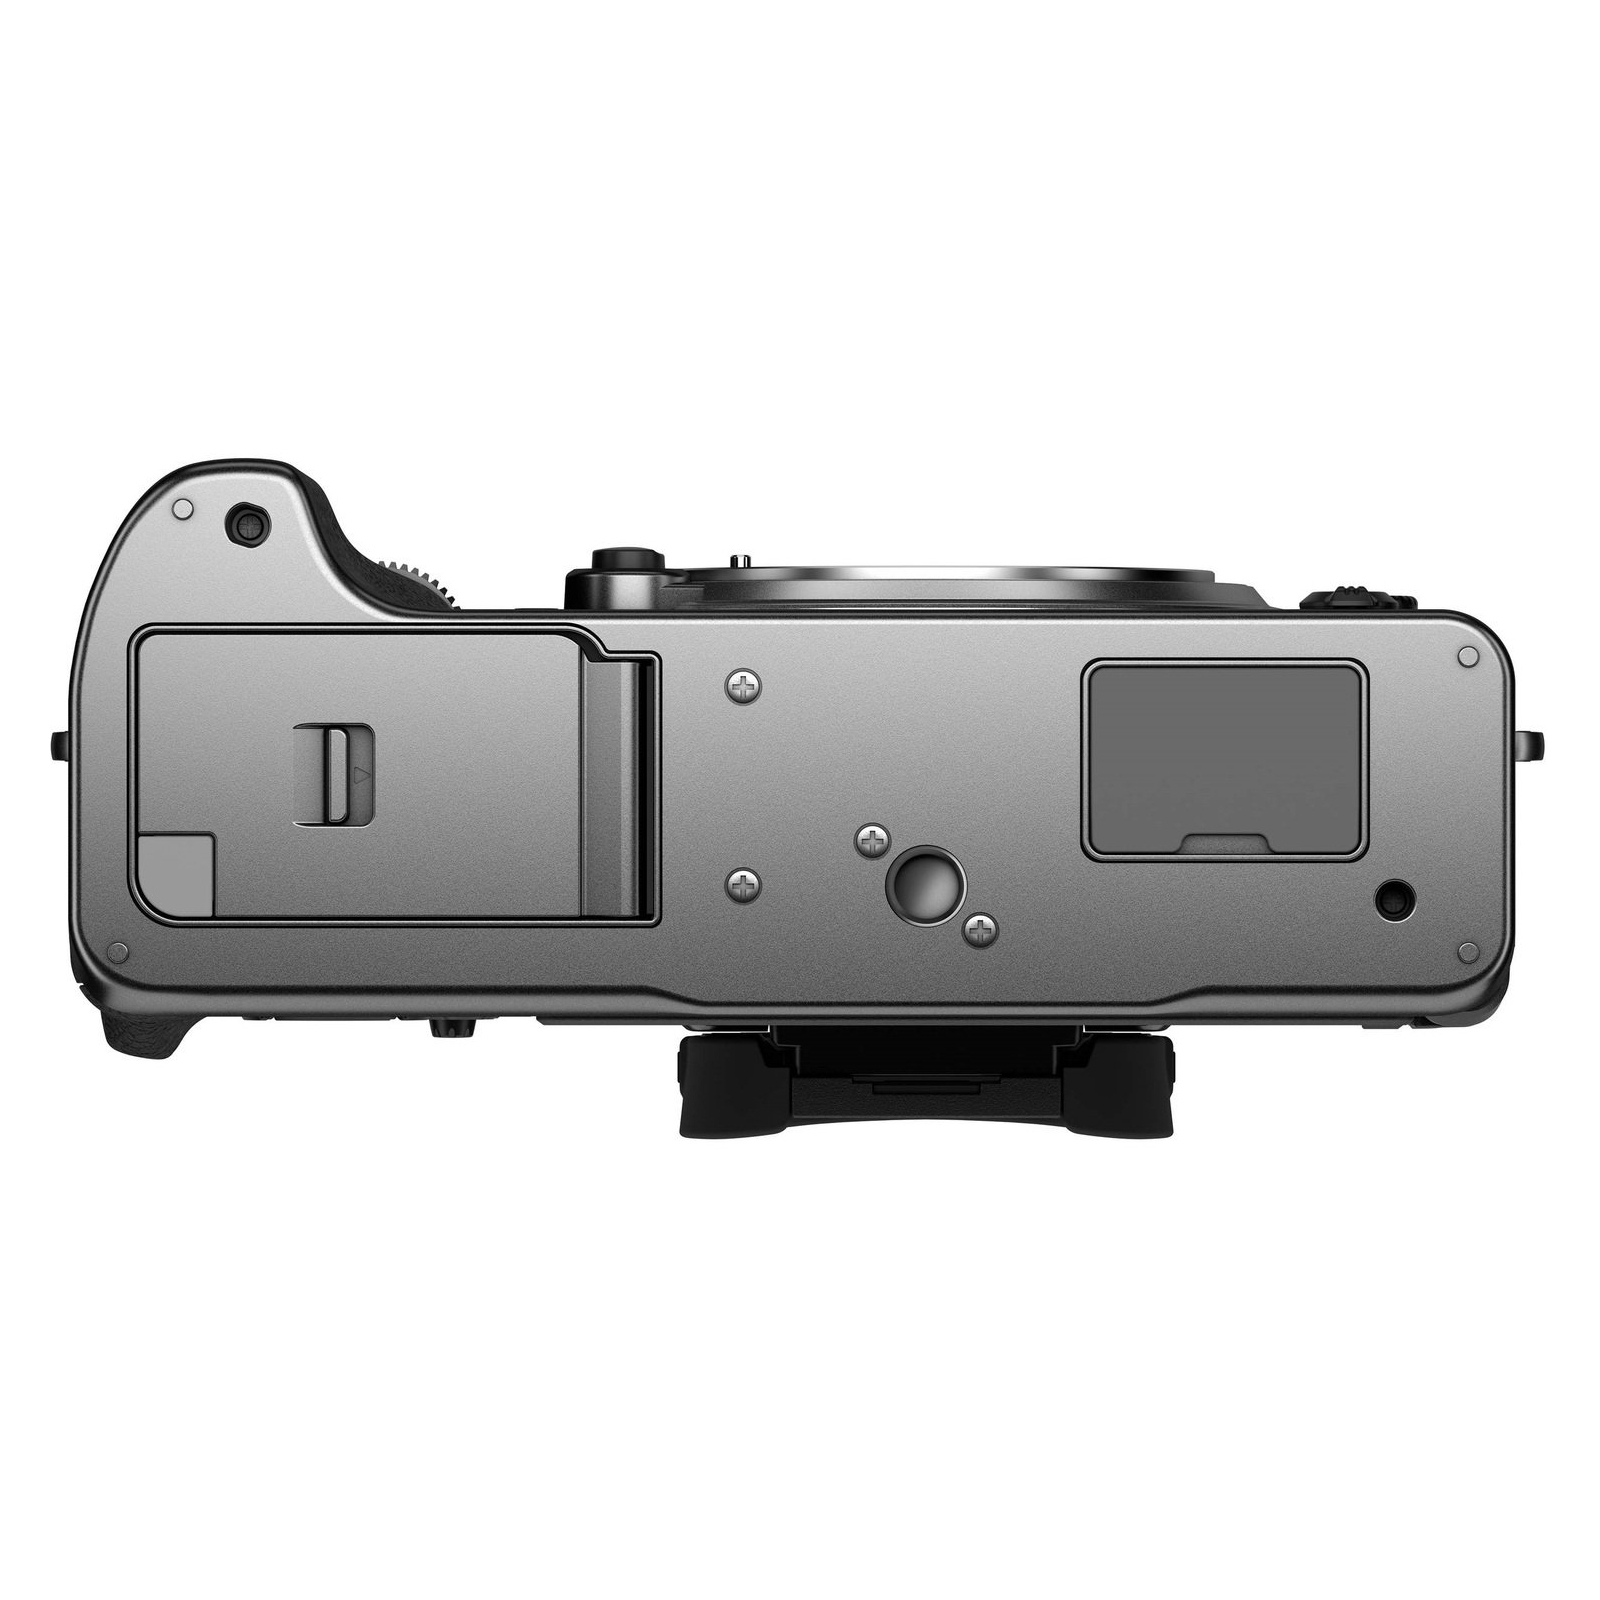 Цифровой фотоаппарат Fujifilm X-T4 Body Silver (16650601) изображение 7